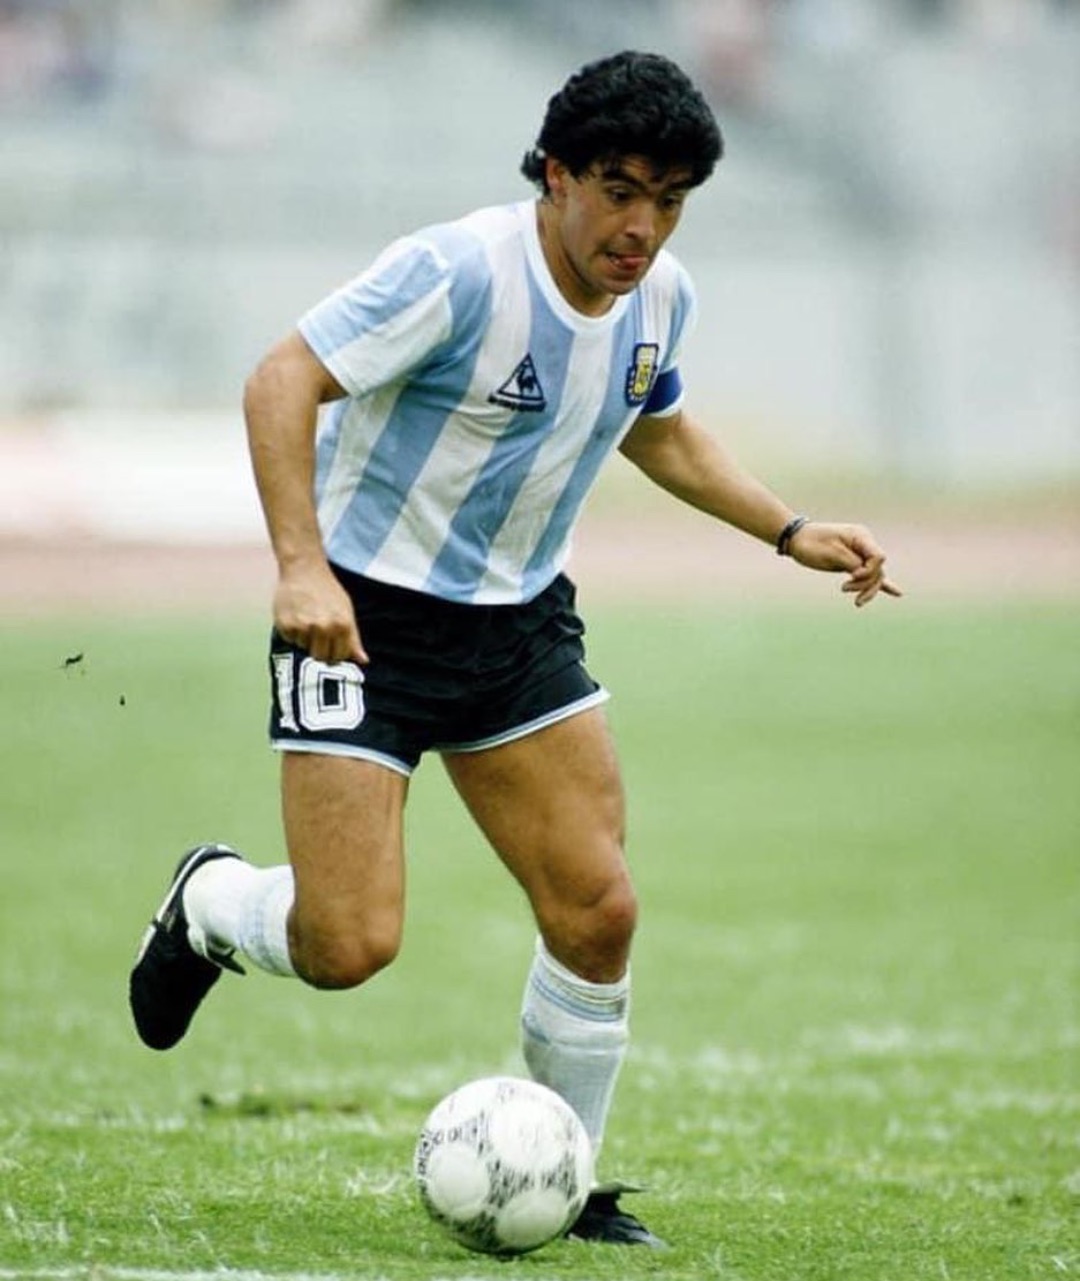 Diego Armando Maradona, le " Pibe de Oro " devenu le dieu du football.